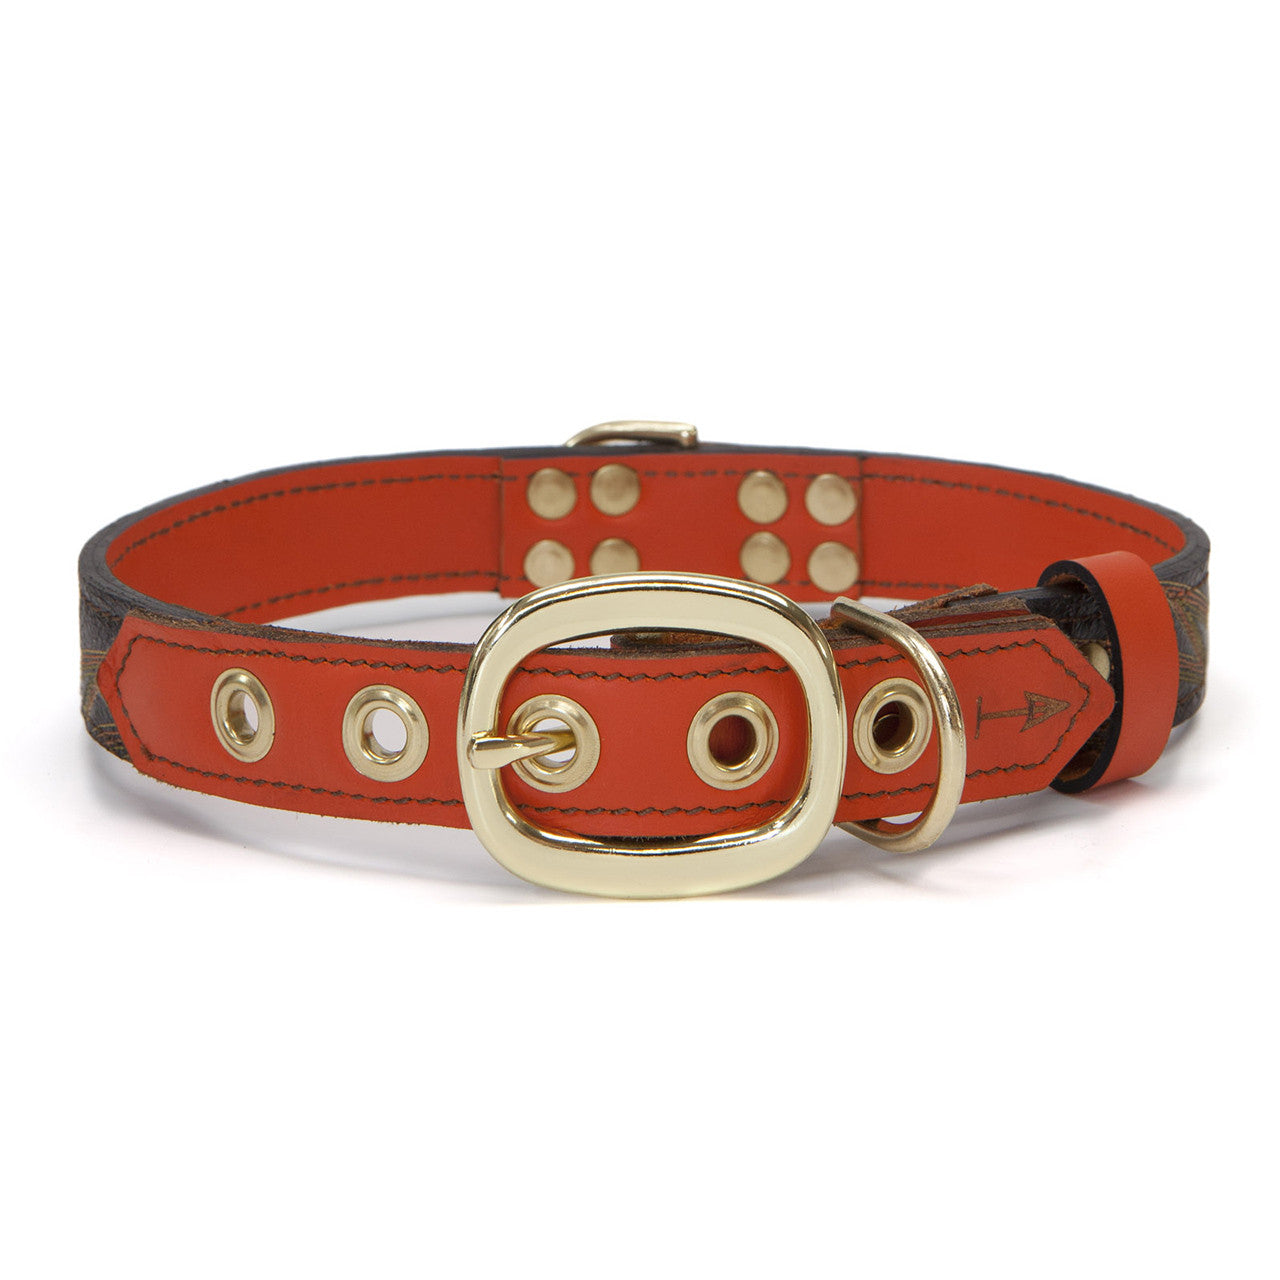 Orange Dog Collar with Brown Leather + Orange Spike Stitching (back view)